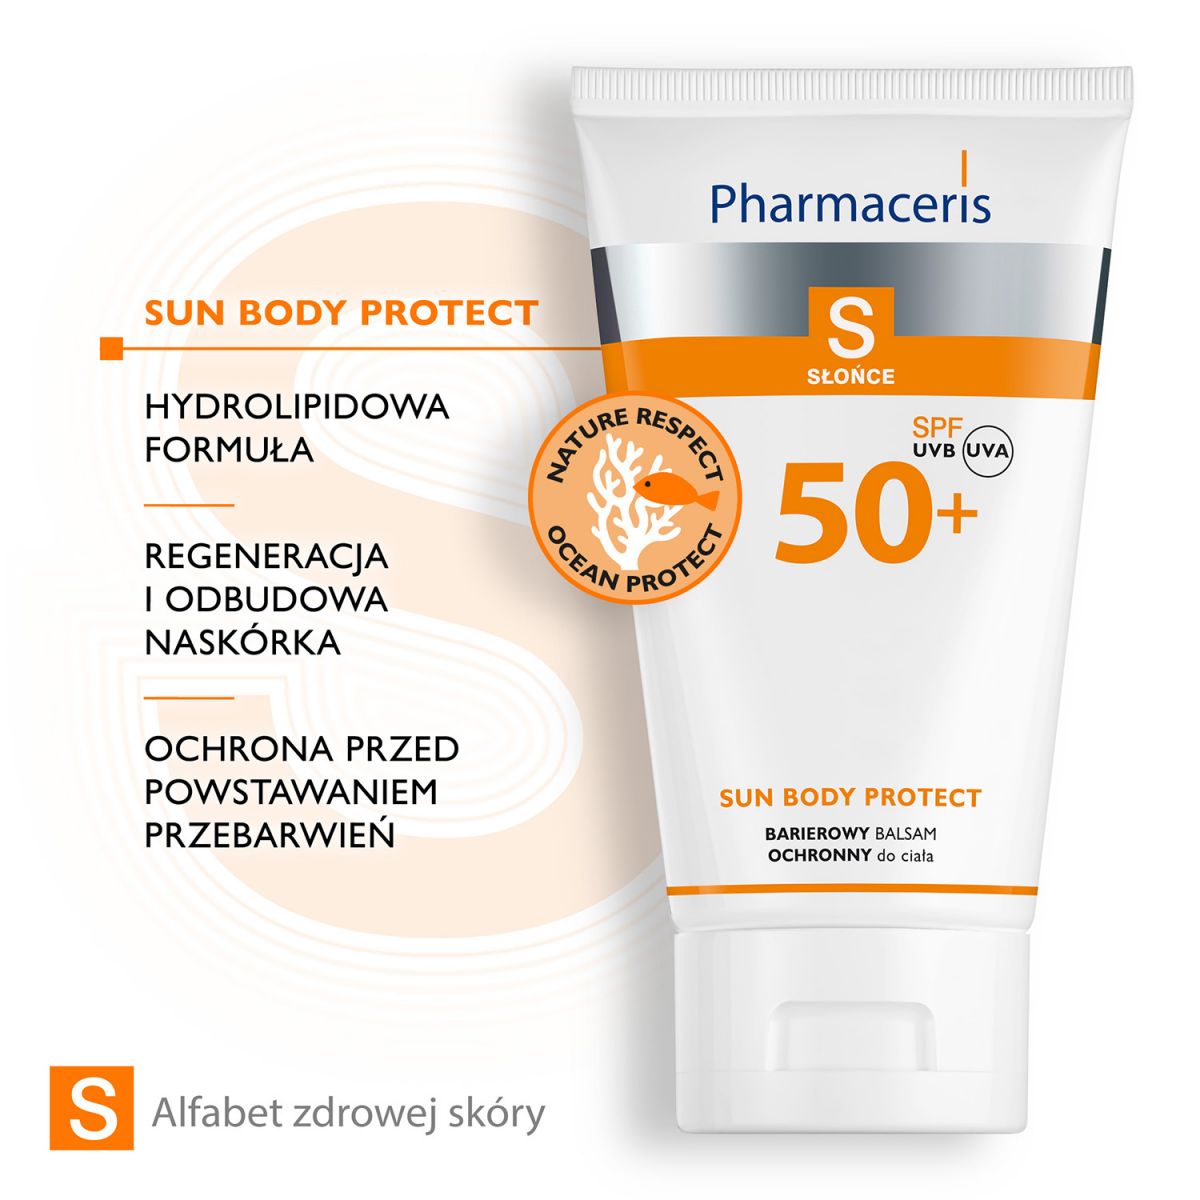 Pharmaceris S SUN BODY PROTECT Barierowy balsam SPF 50+ 150ml